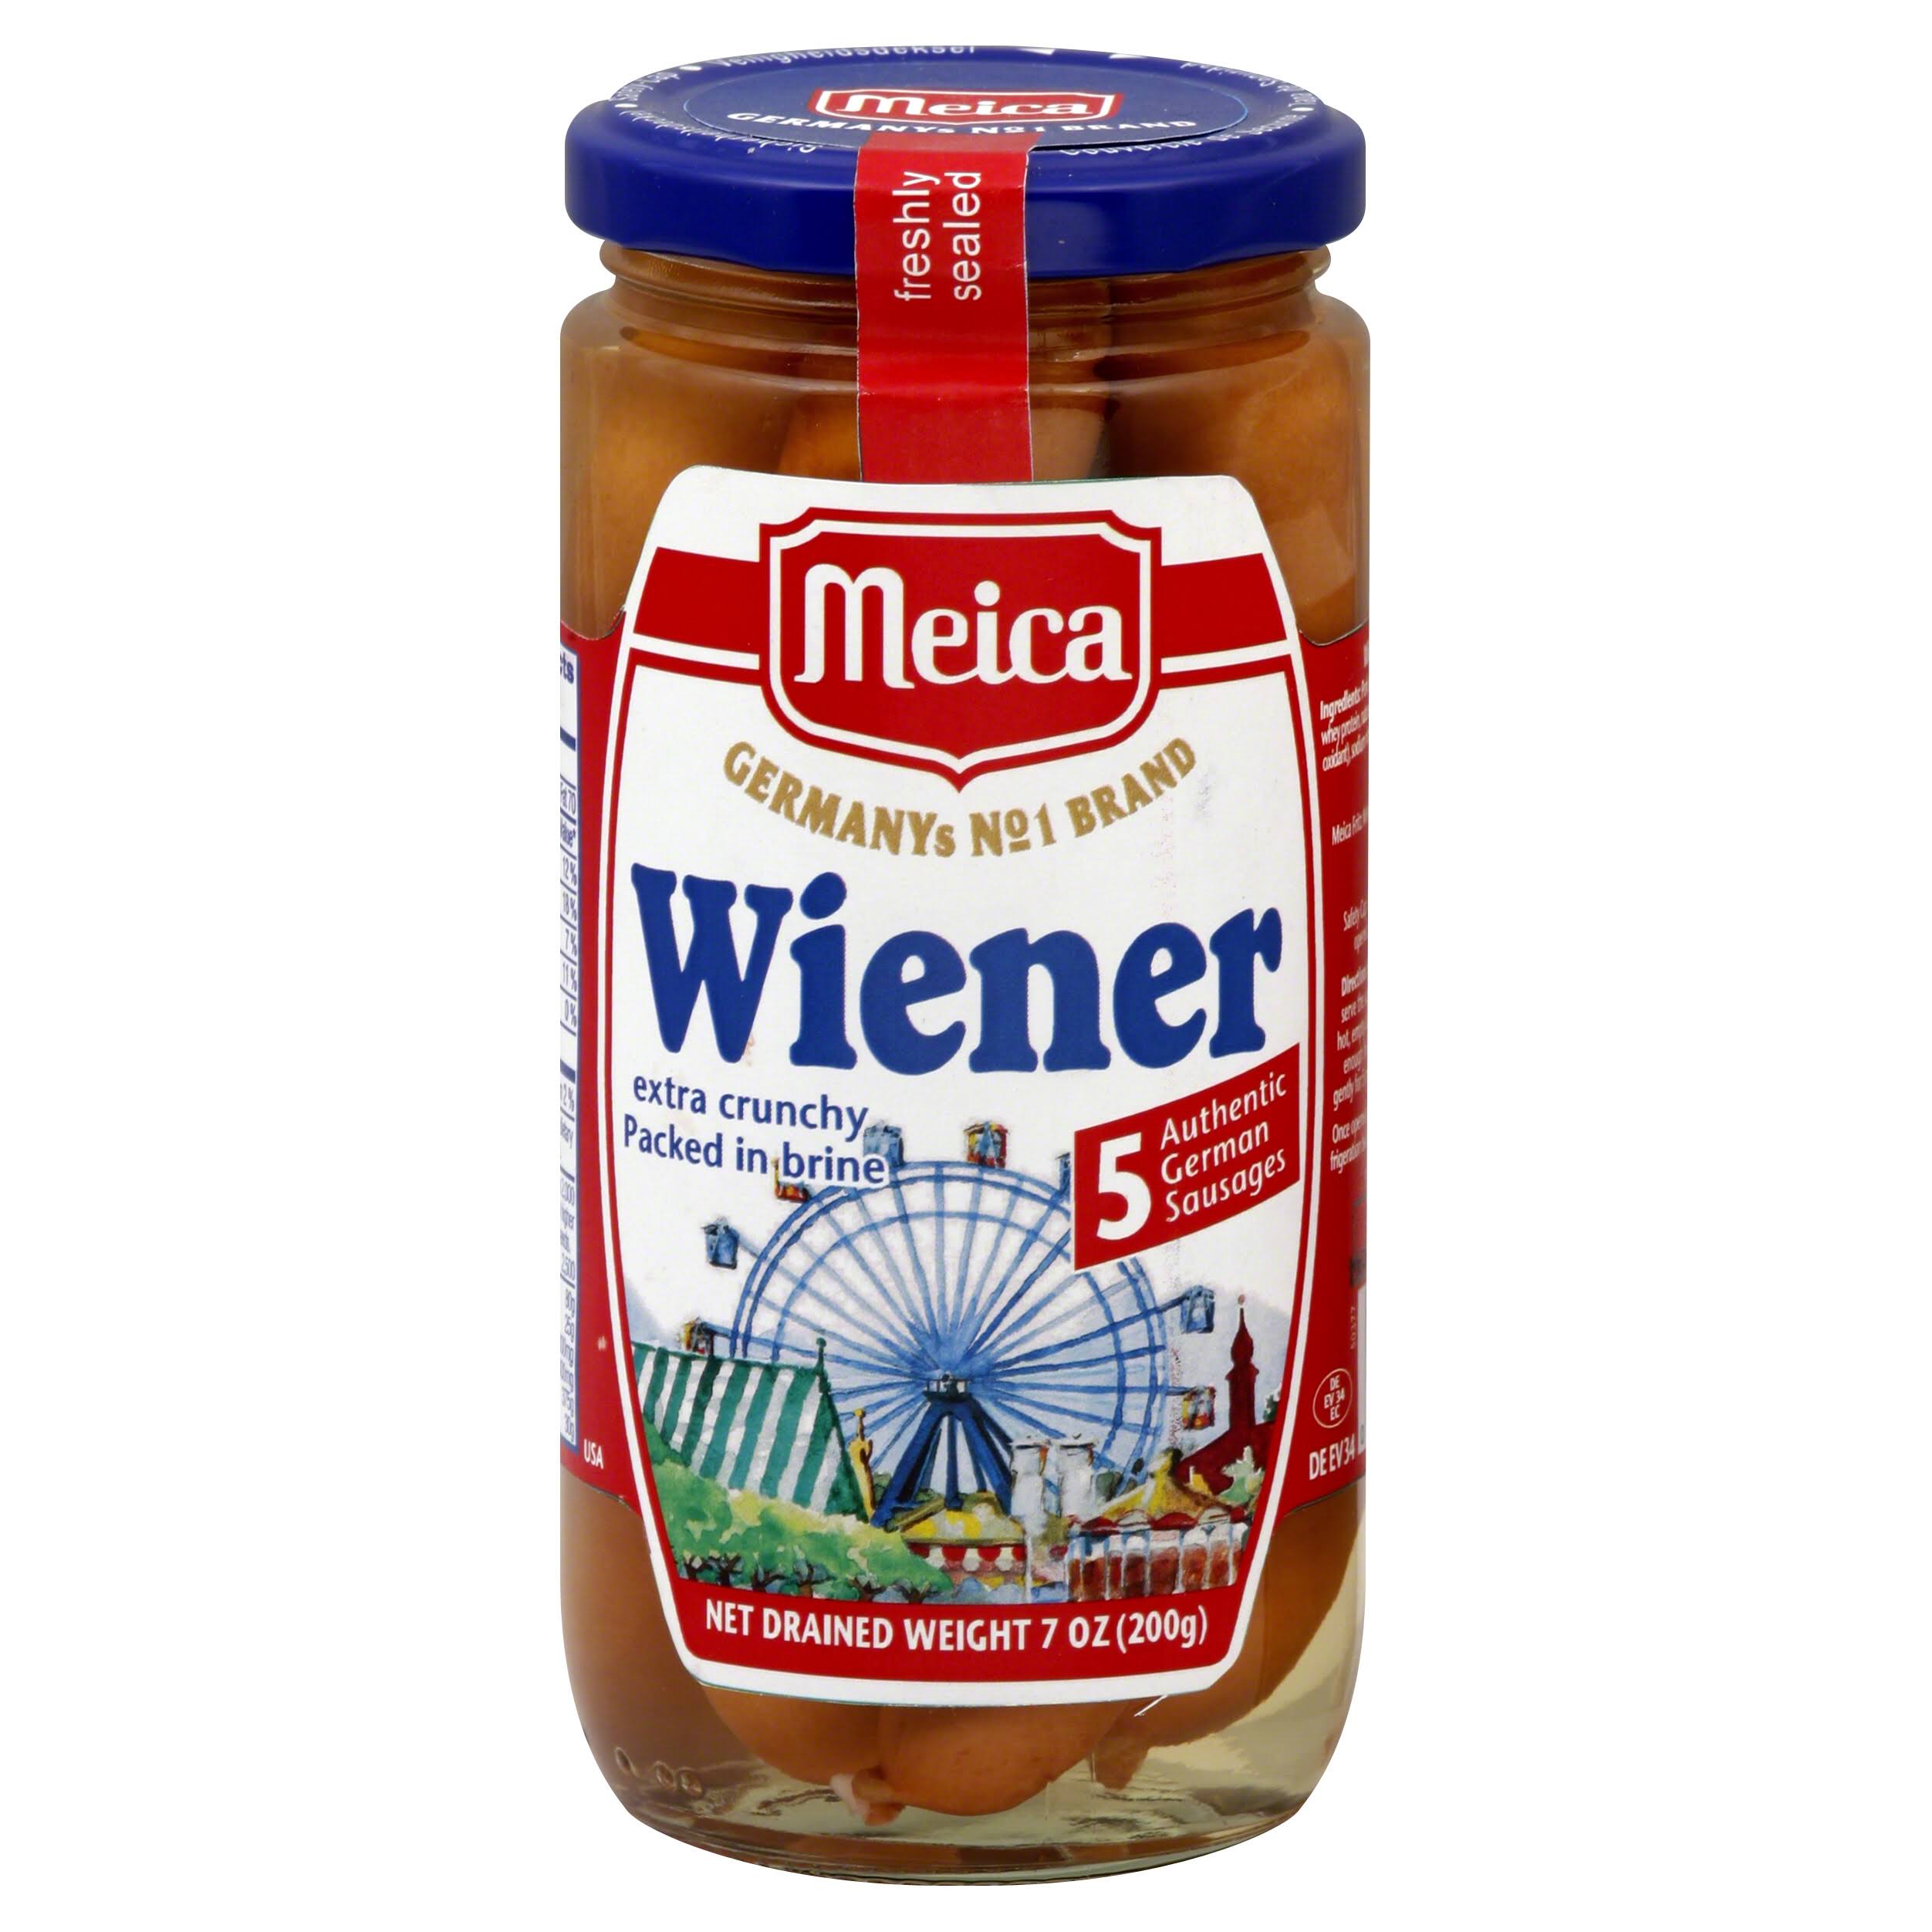 Meica Wiener, Pork, Extra Crunchy, Packed in Brine - 5 sausages, 7 oz